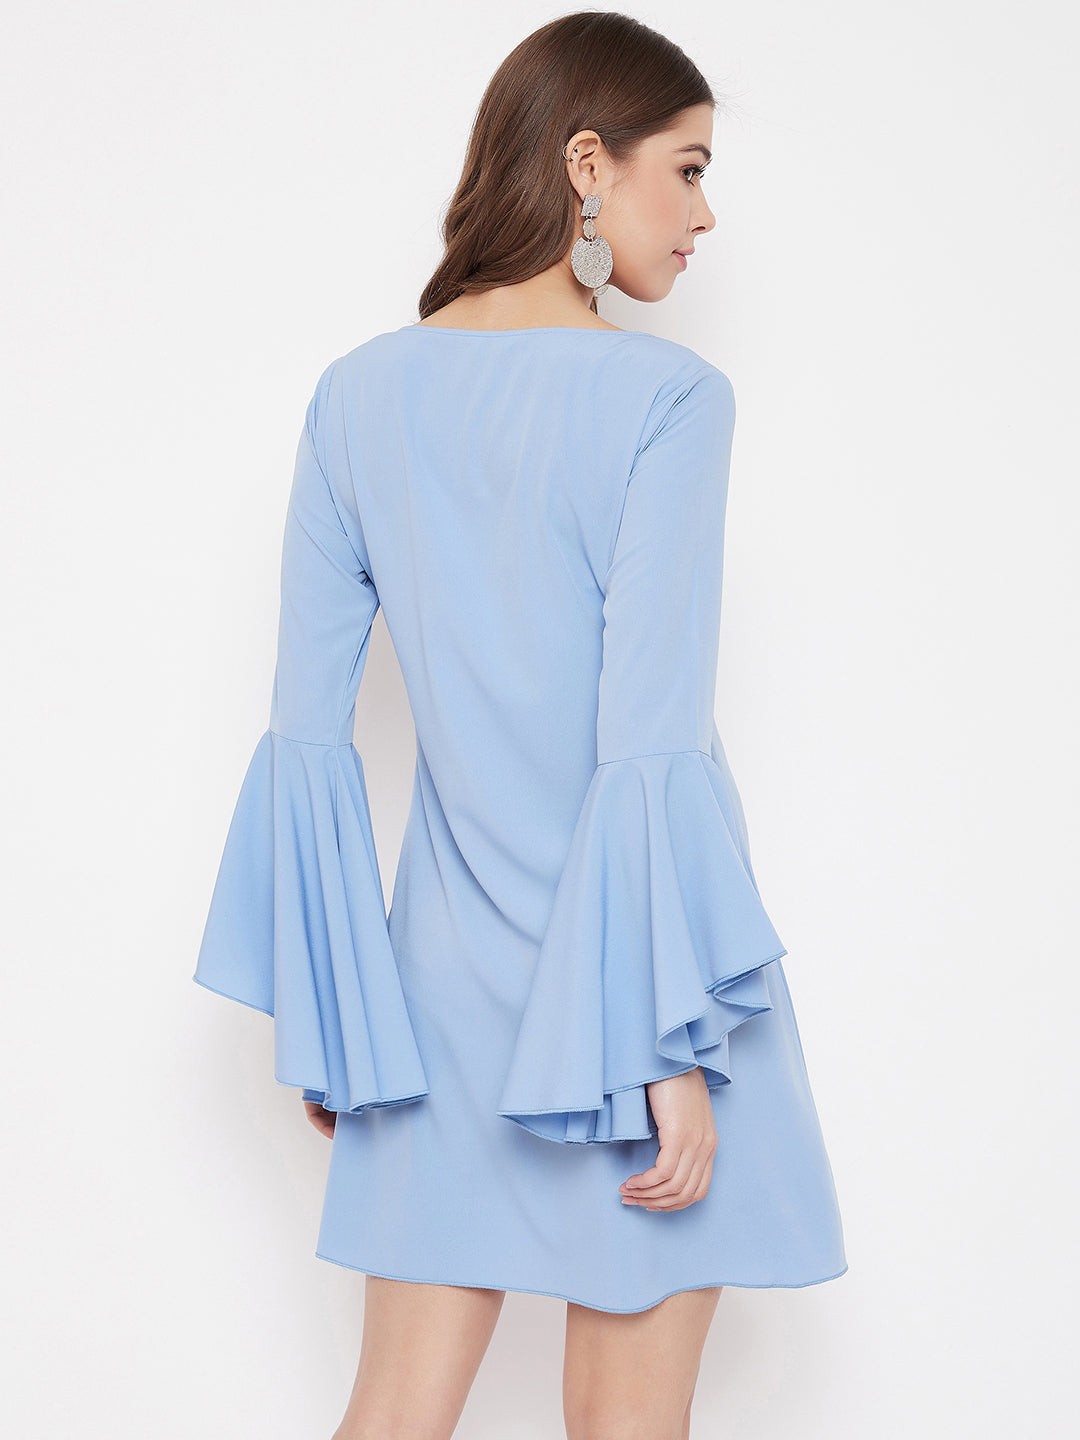 Berrylush Women Solid Blue Round Neck Bell Sleeve A-Line Mini Dress